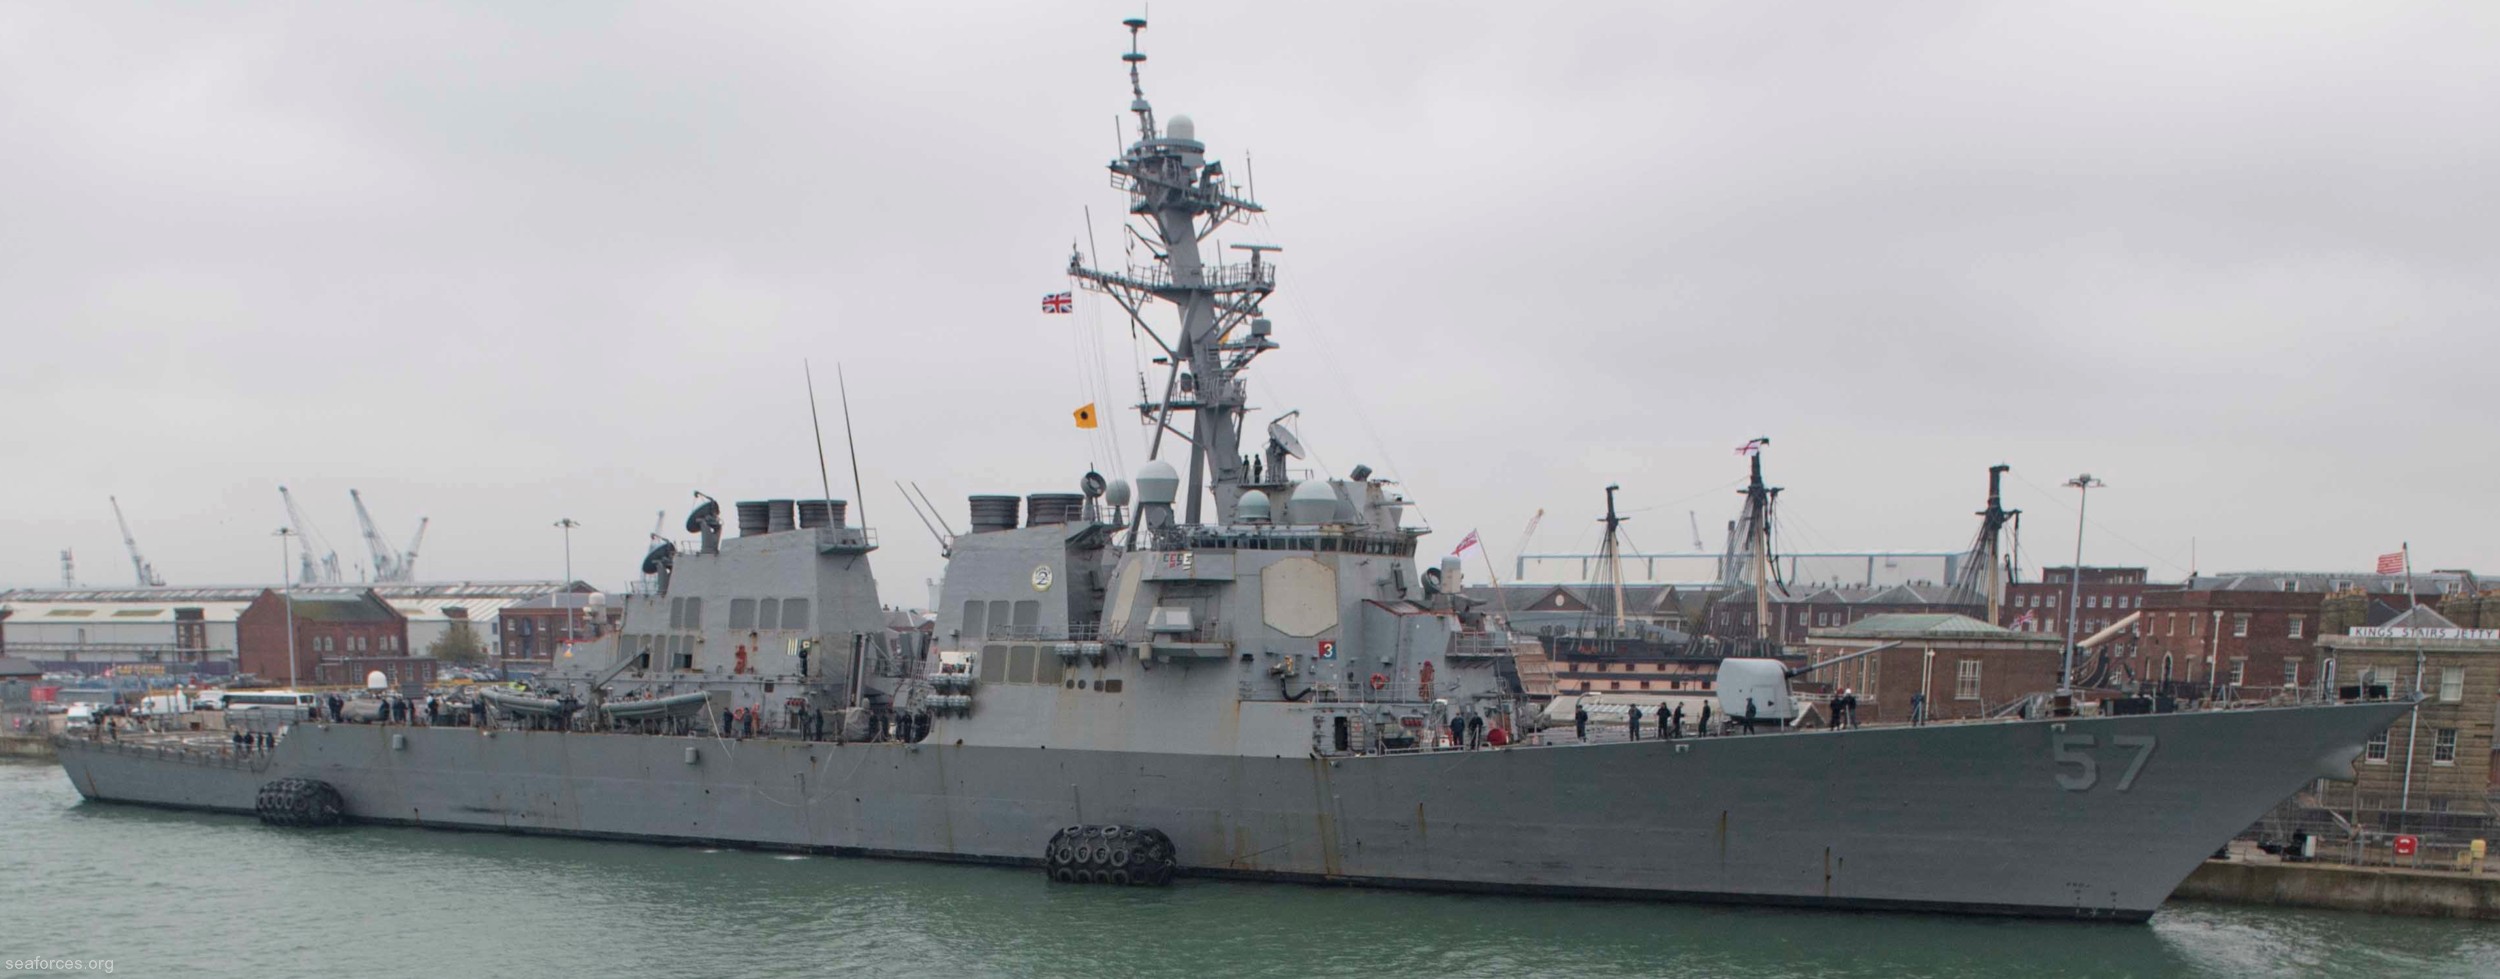 ddg-57 uss mitscher guided missile destroyer us navy 04 portsmouth uk